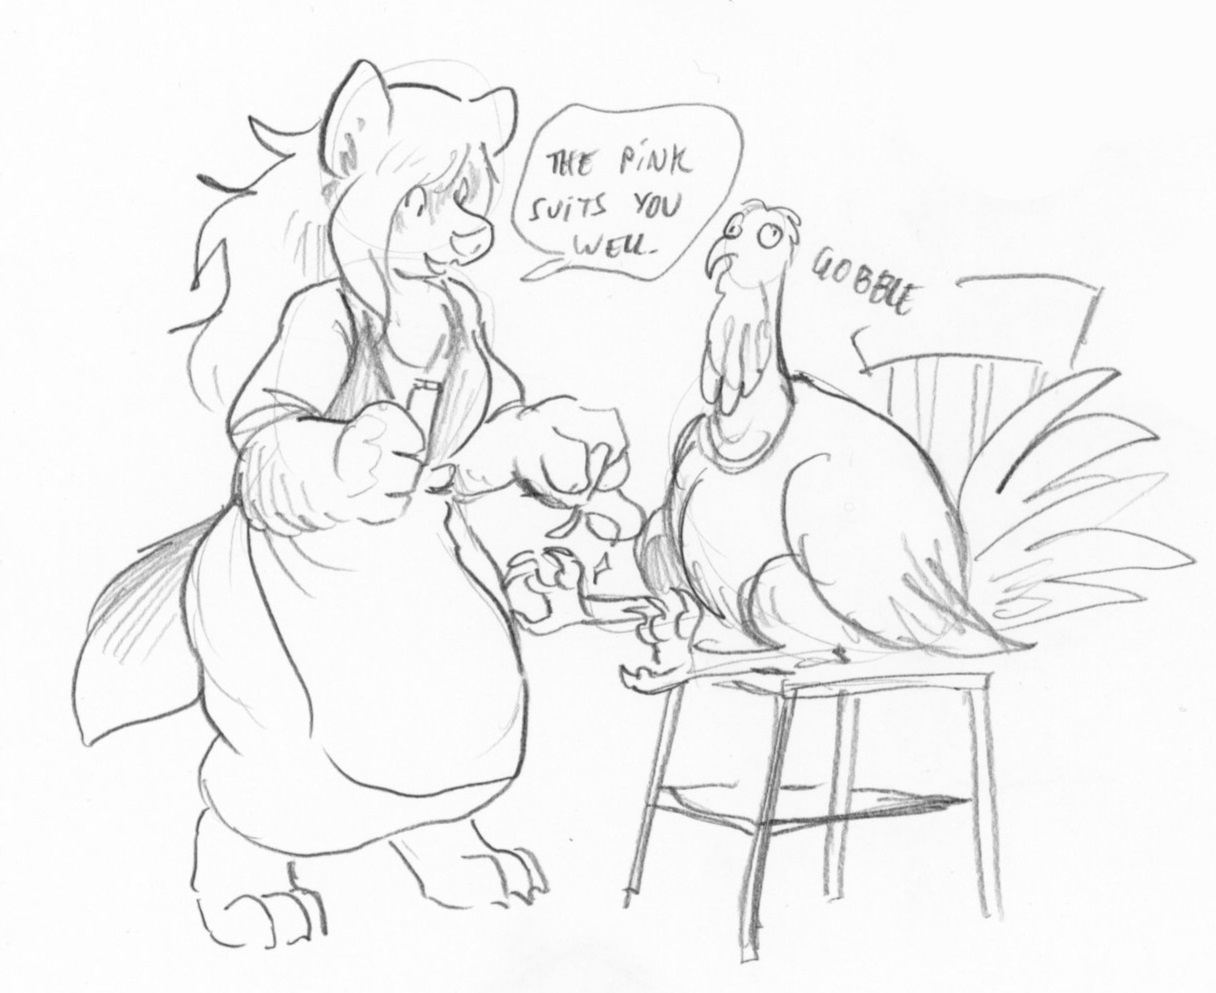 Maxine Preparing a Turkey by Cervelet